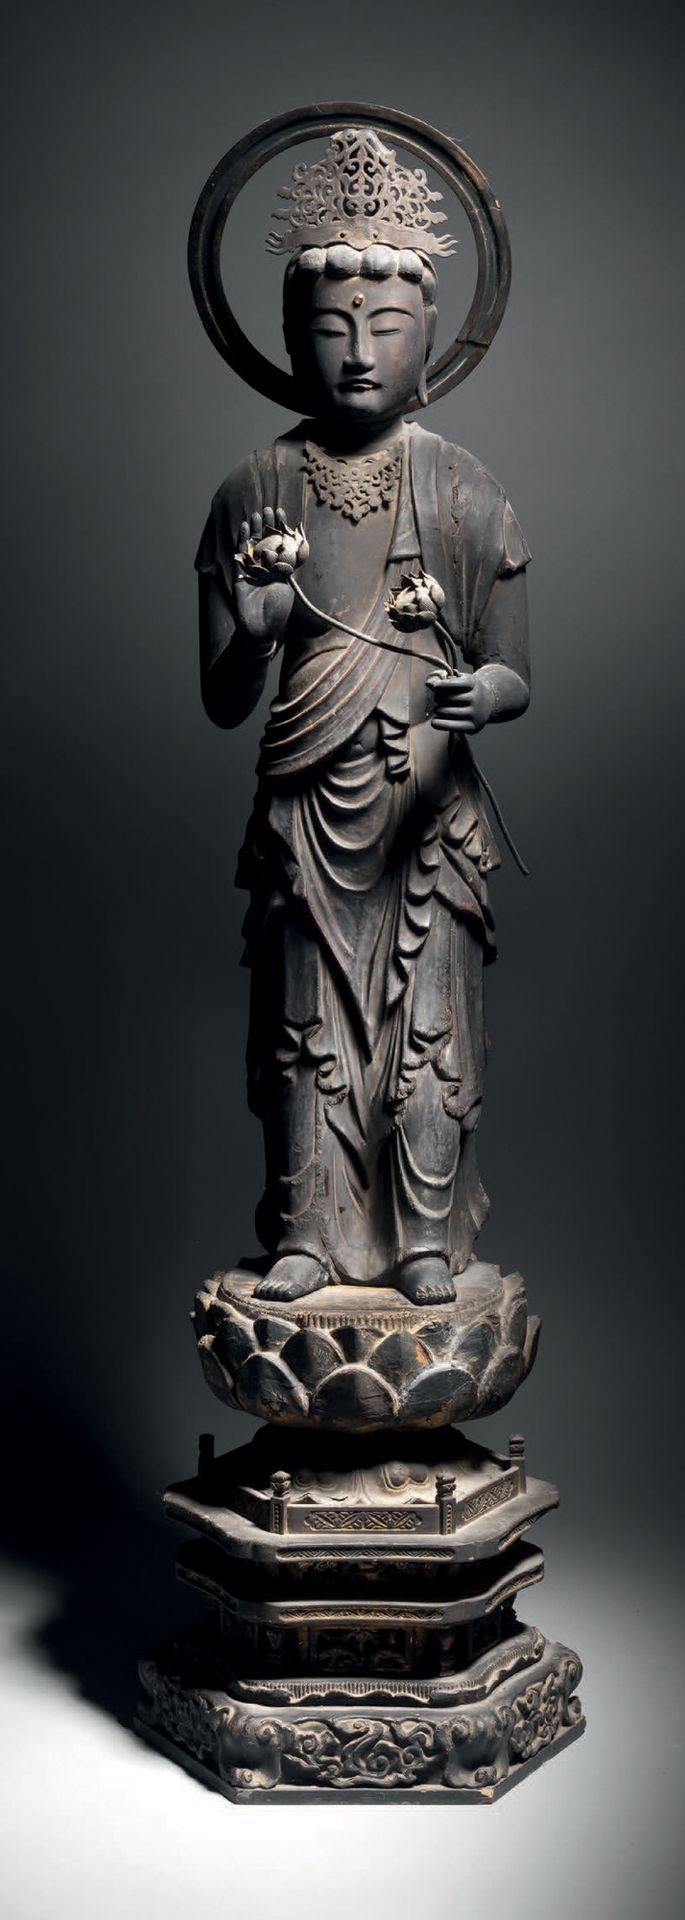 Null 观音菩萨，日本，约18世纪，高63厘米。漆面和镀金的木材
慈悲的菩萨站在一个以莲花为顶的宝座上。他身穿多褶的王子服装，右手做无畏的手势，左手拿着两朵莲&hellip;